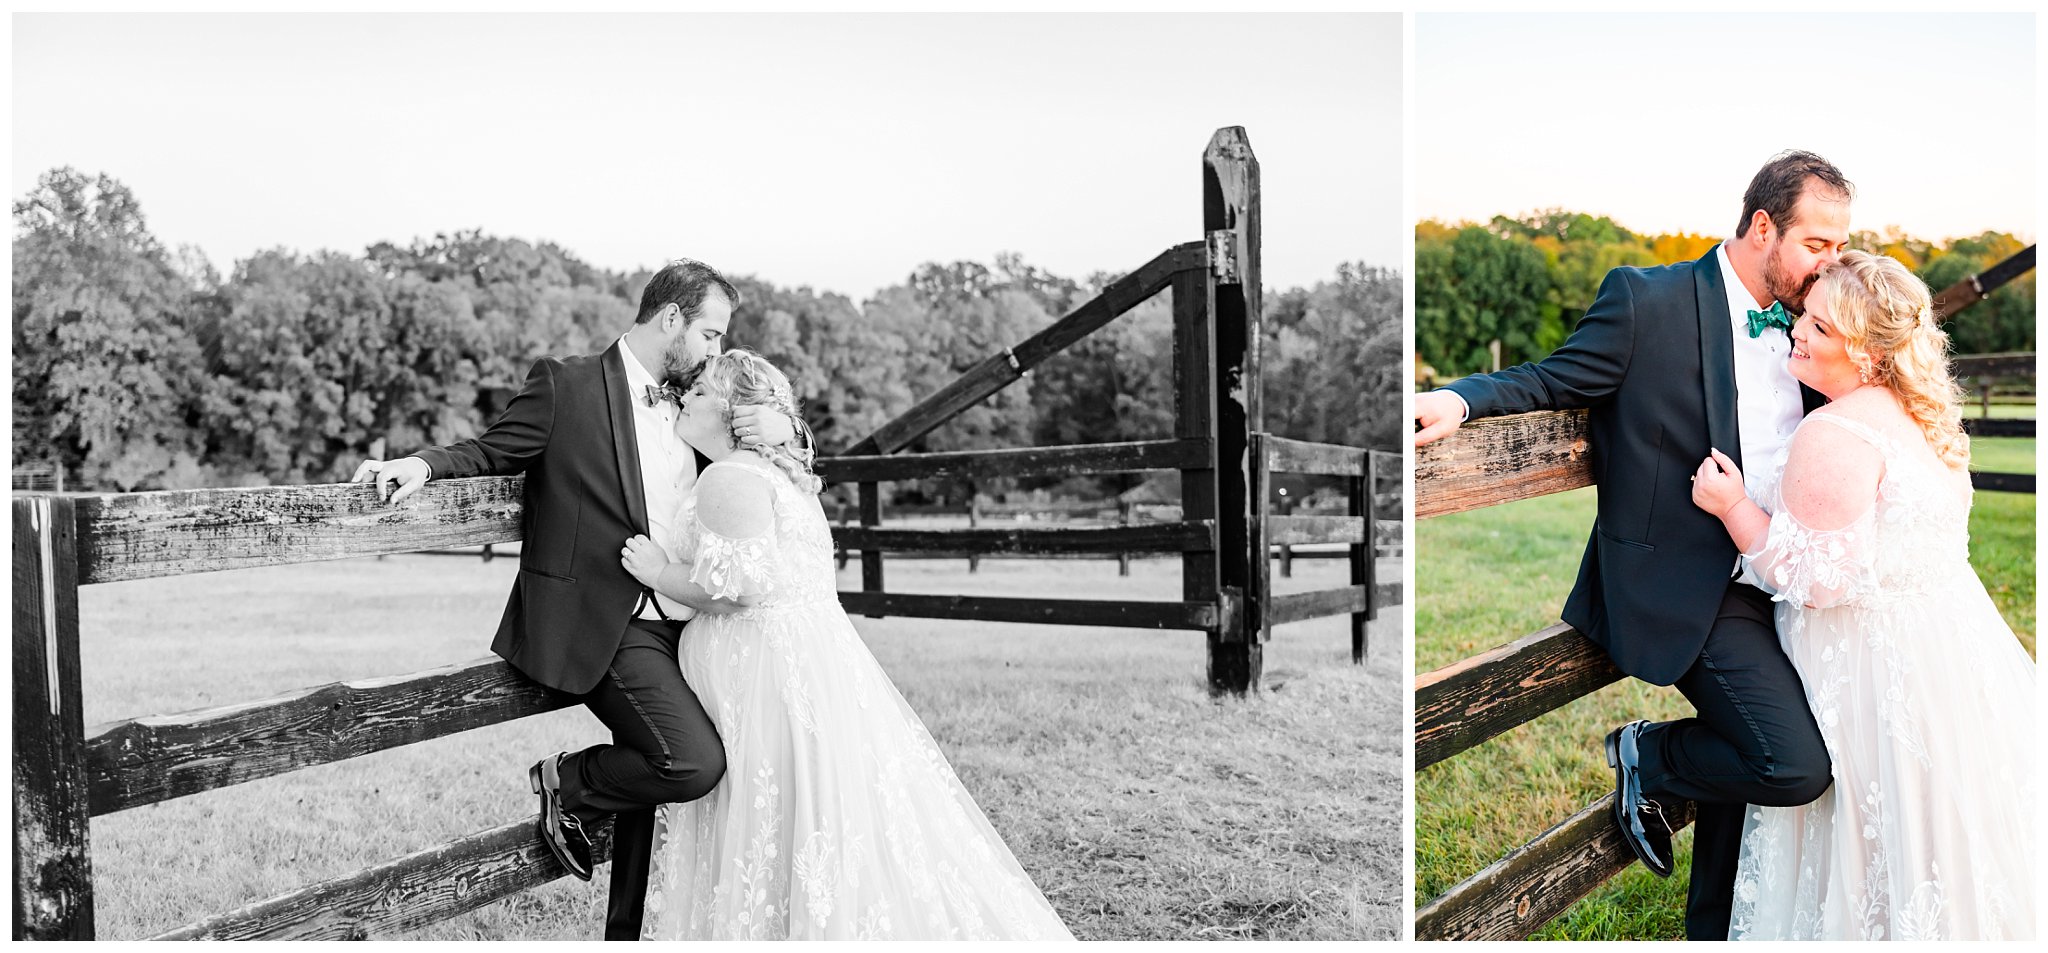 Charlotte wedding photographer captures bride and groom portraits